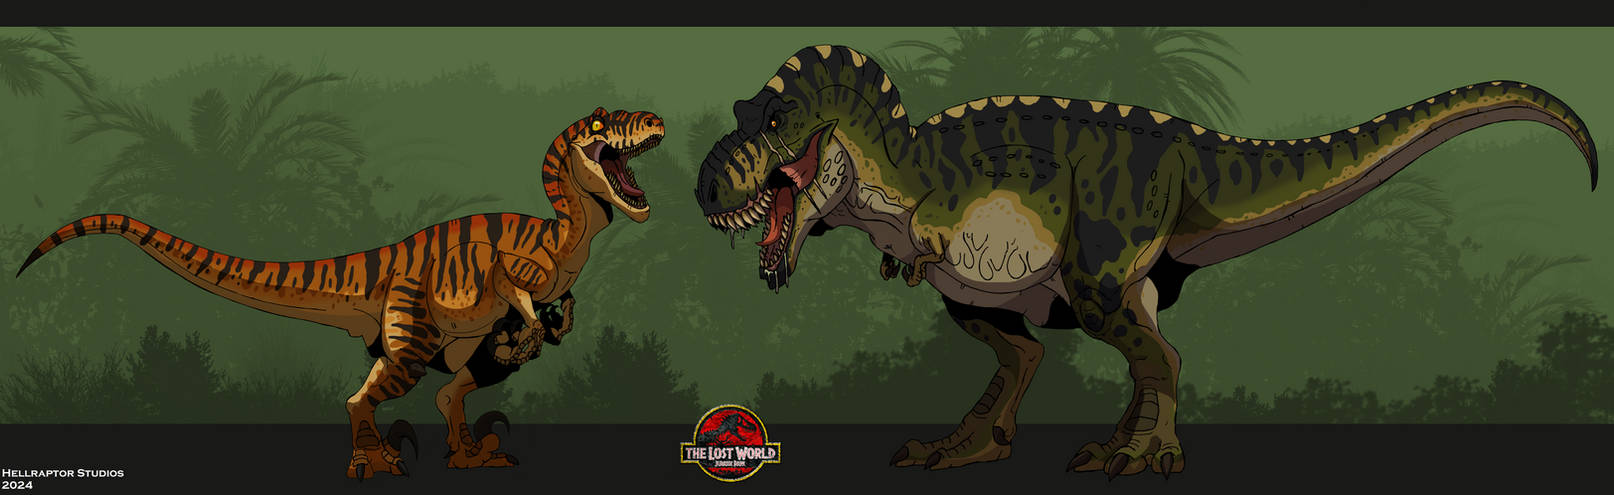 Jurassic Park: The Lost World Top Predators